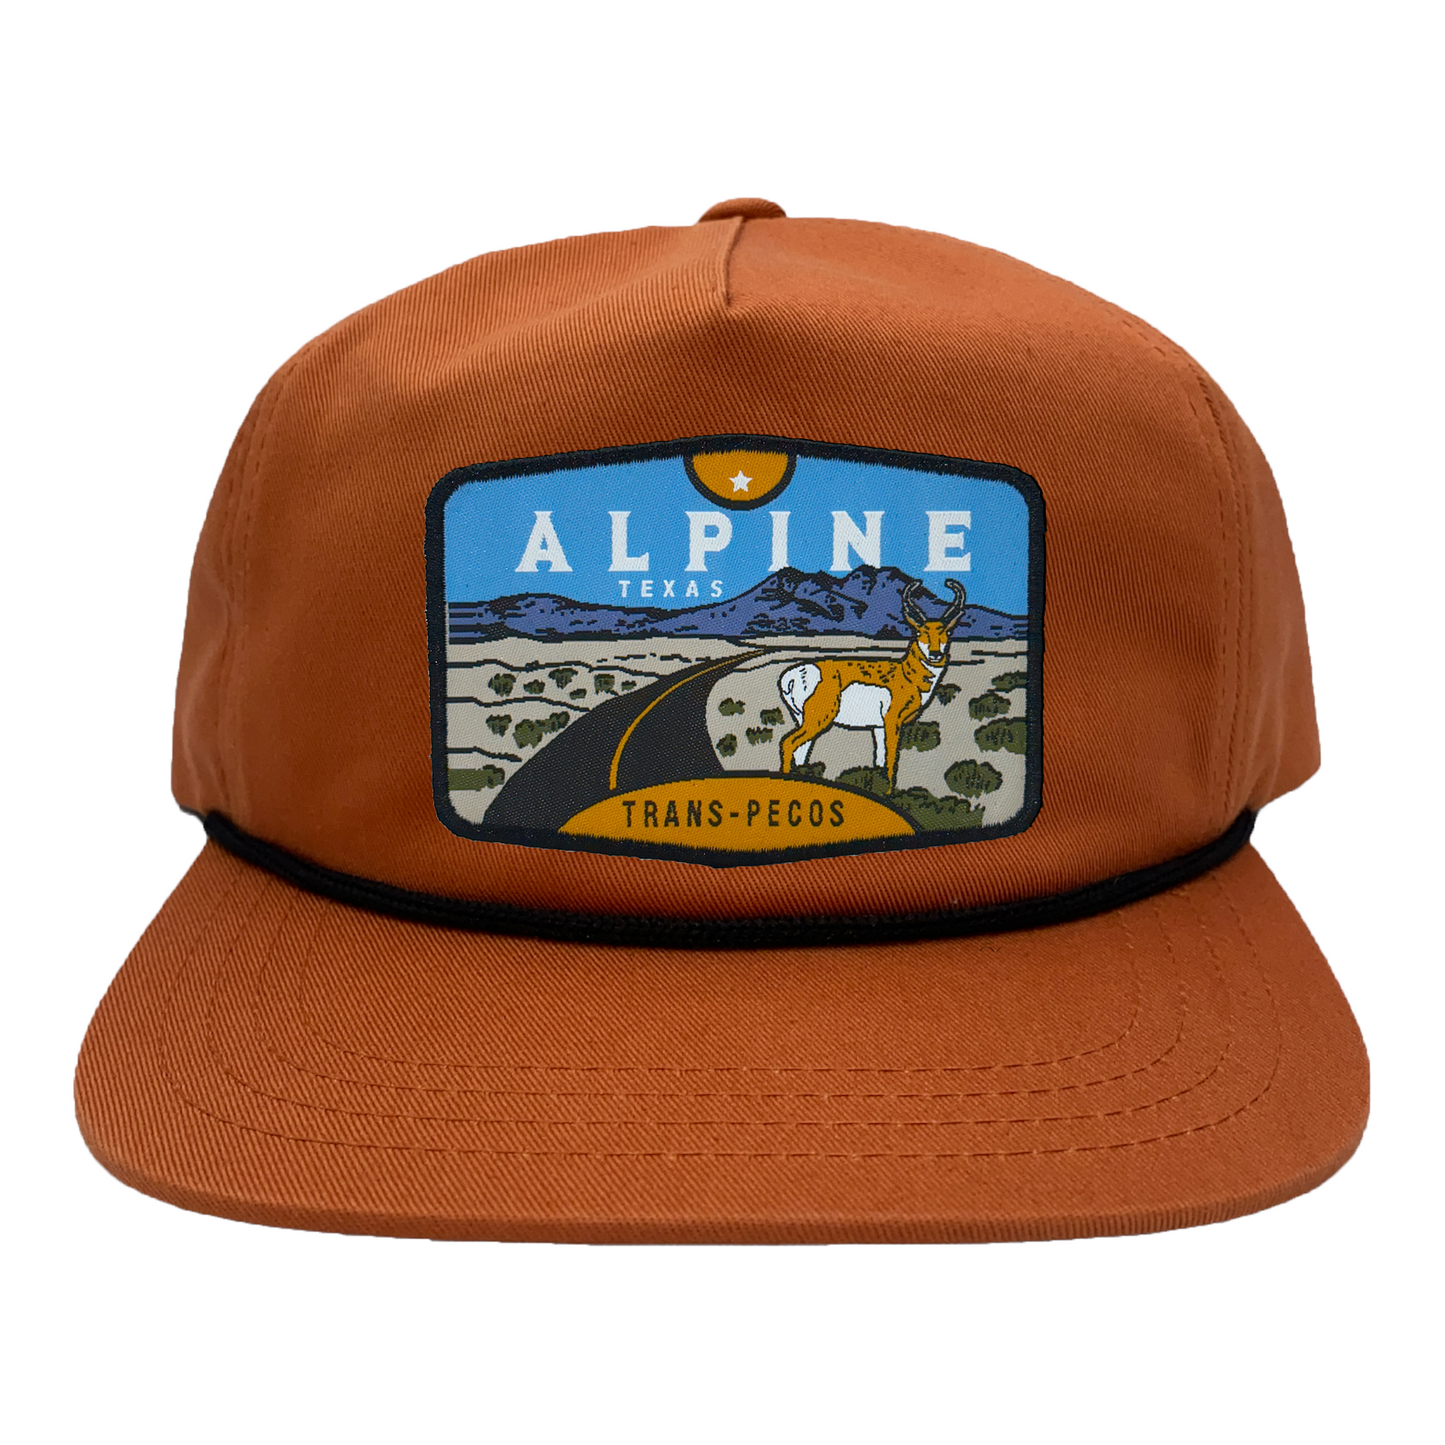 Alpine , TX Snapback